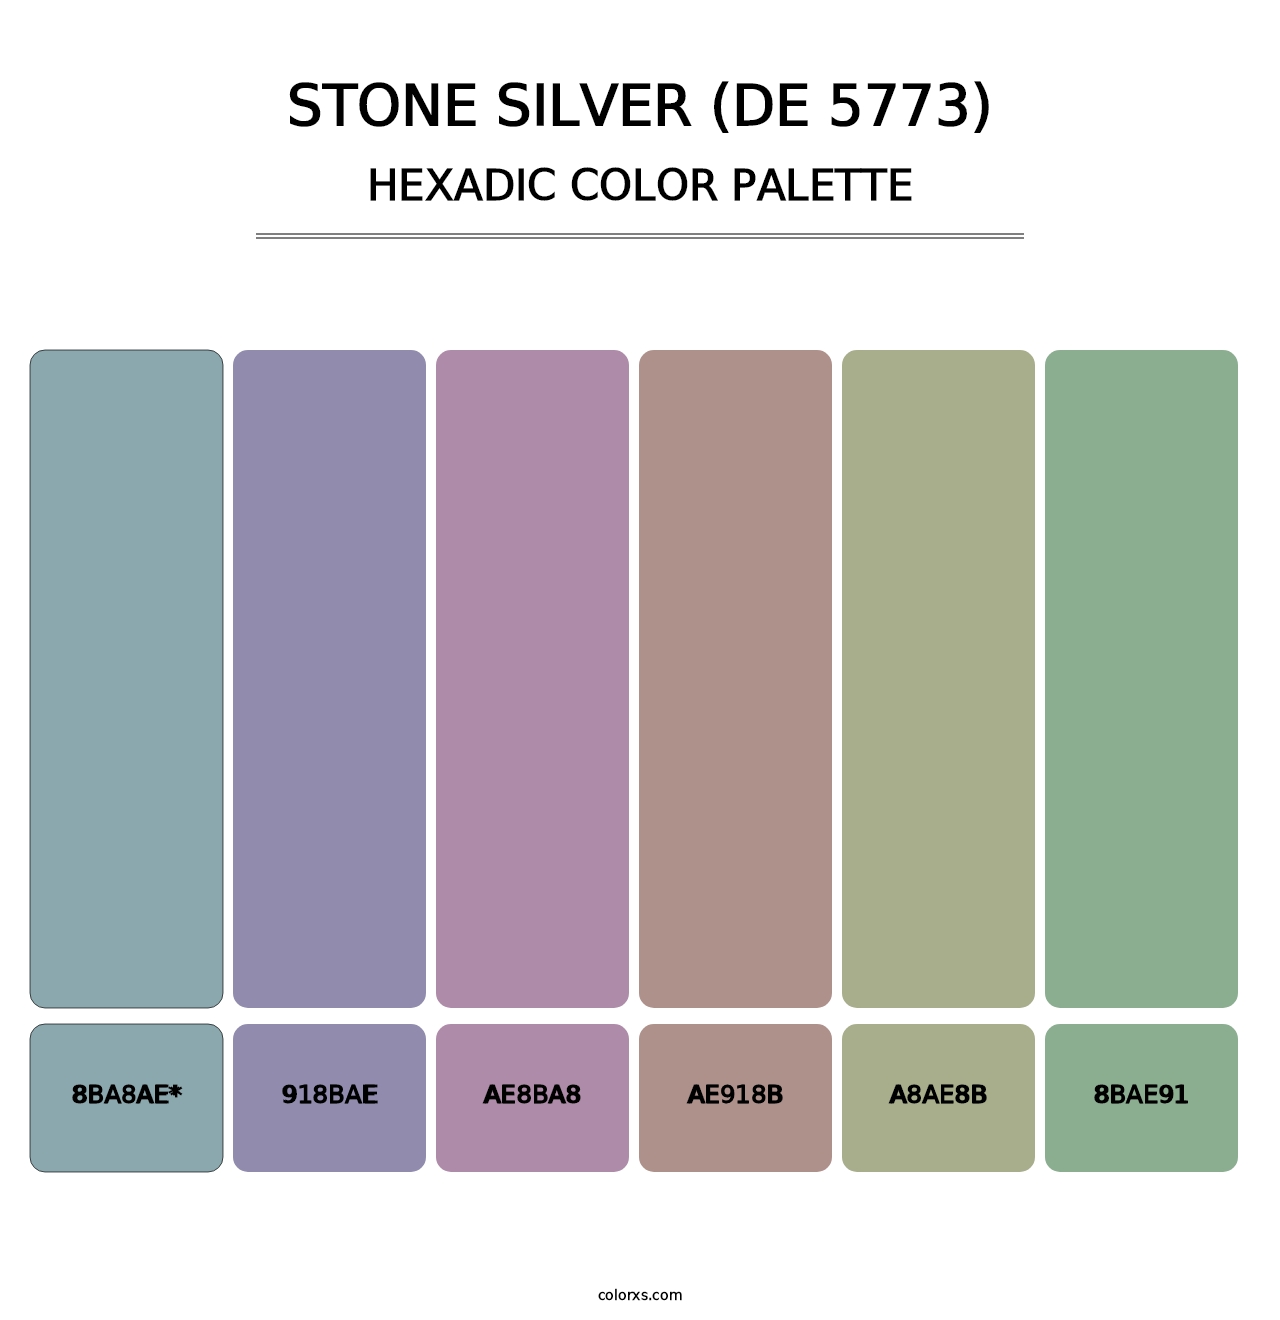 Stone Silver (DE 5773) - Hexadic Color Palette